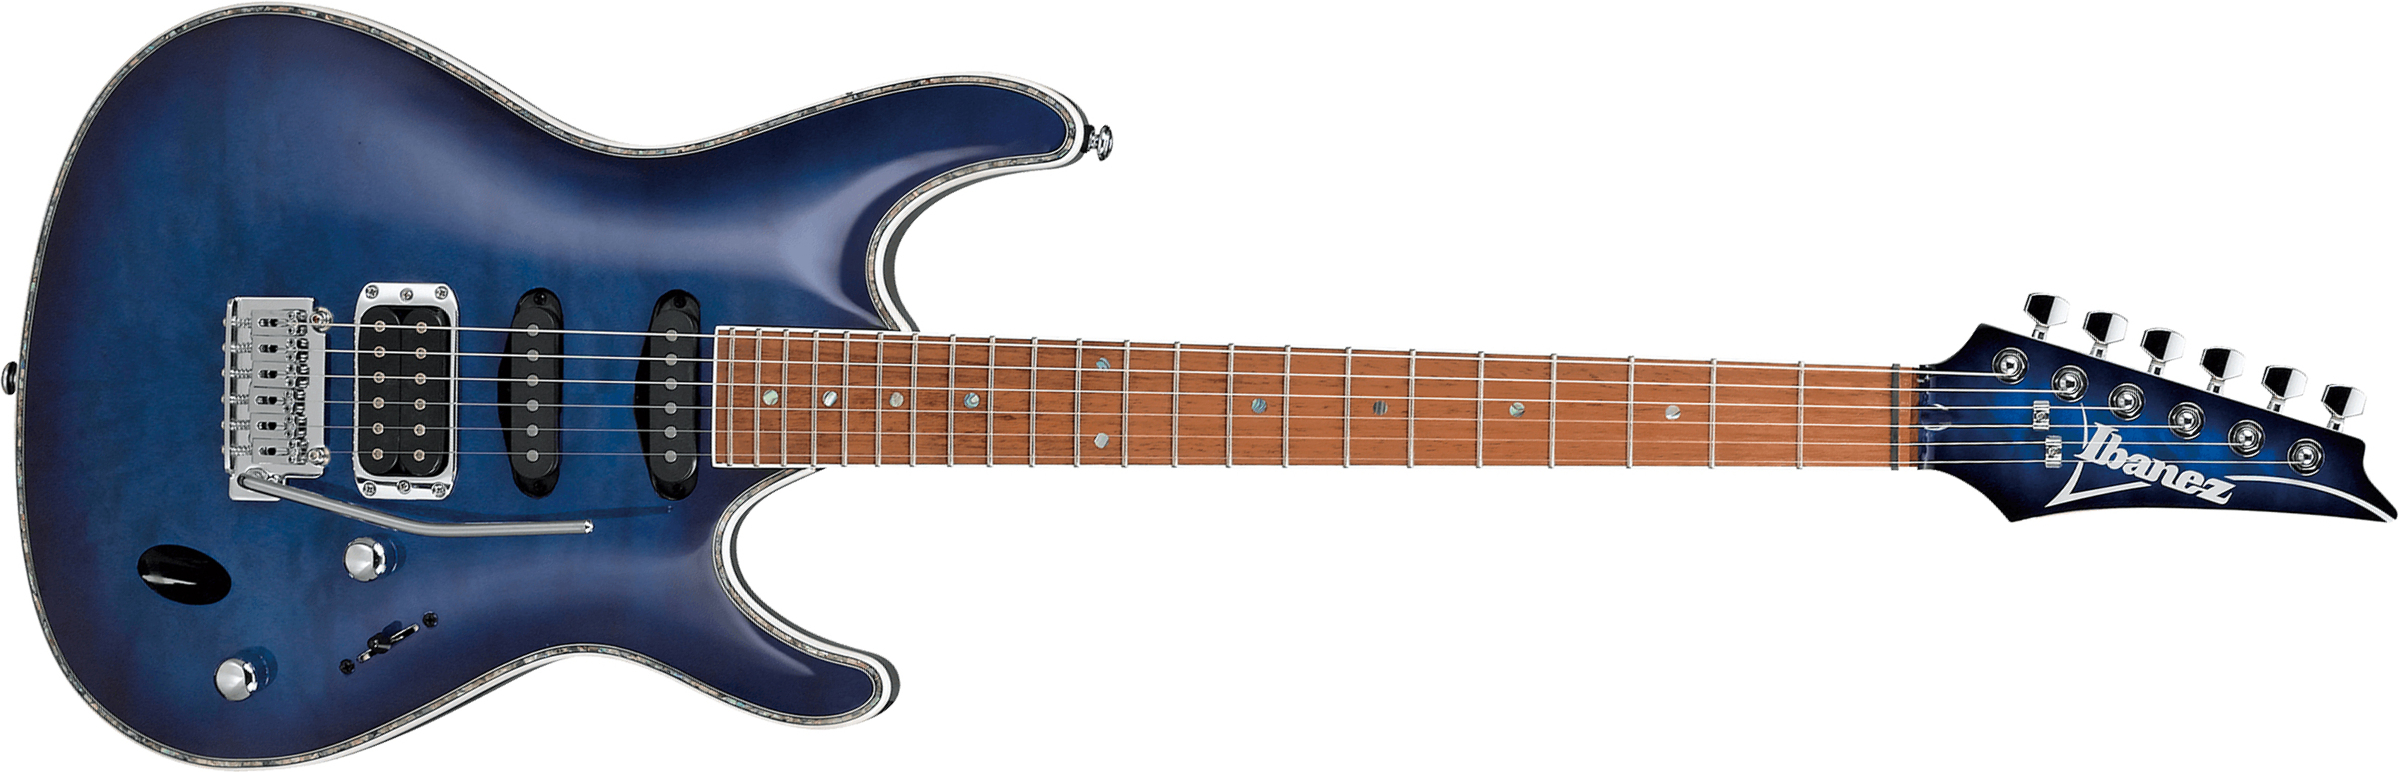 Ibanez Sa360nqm Spb Standard Hss Trem Jat - Sapphire Blue - E-Gitarre in Str-Form - Main picture